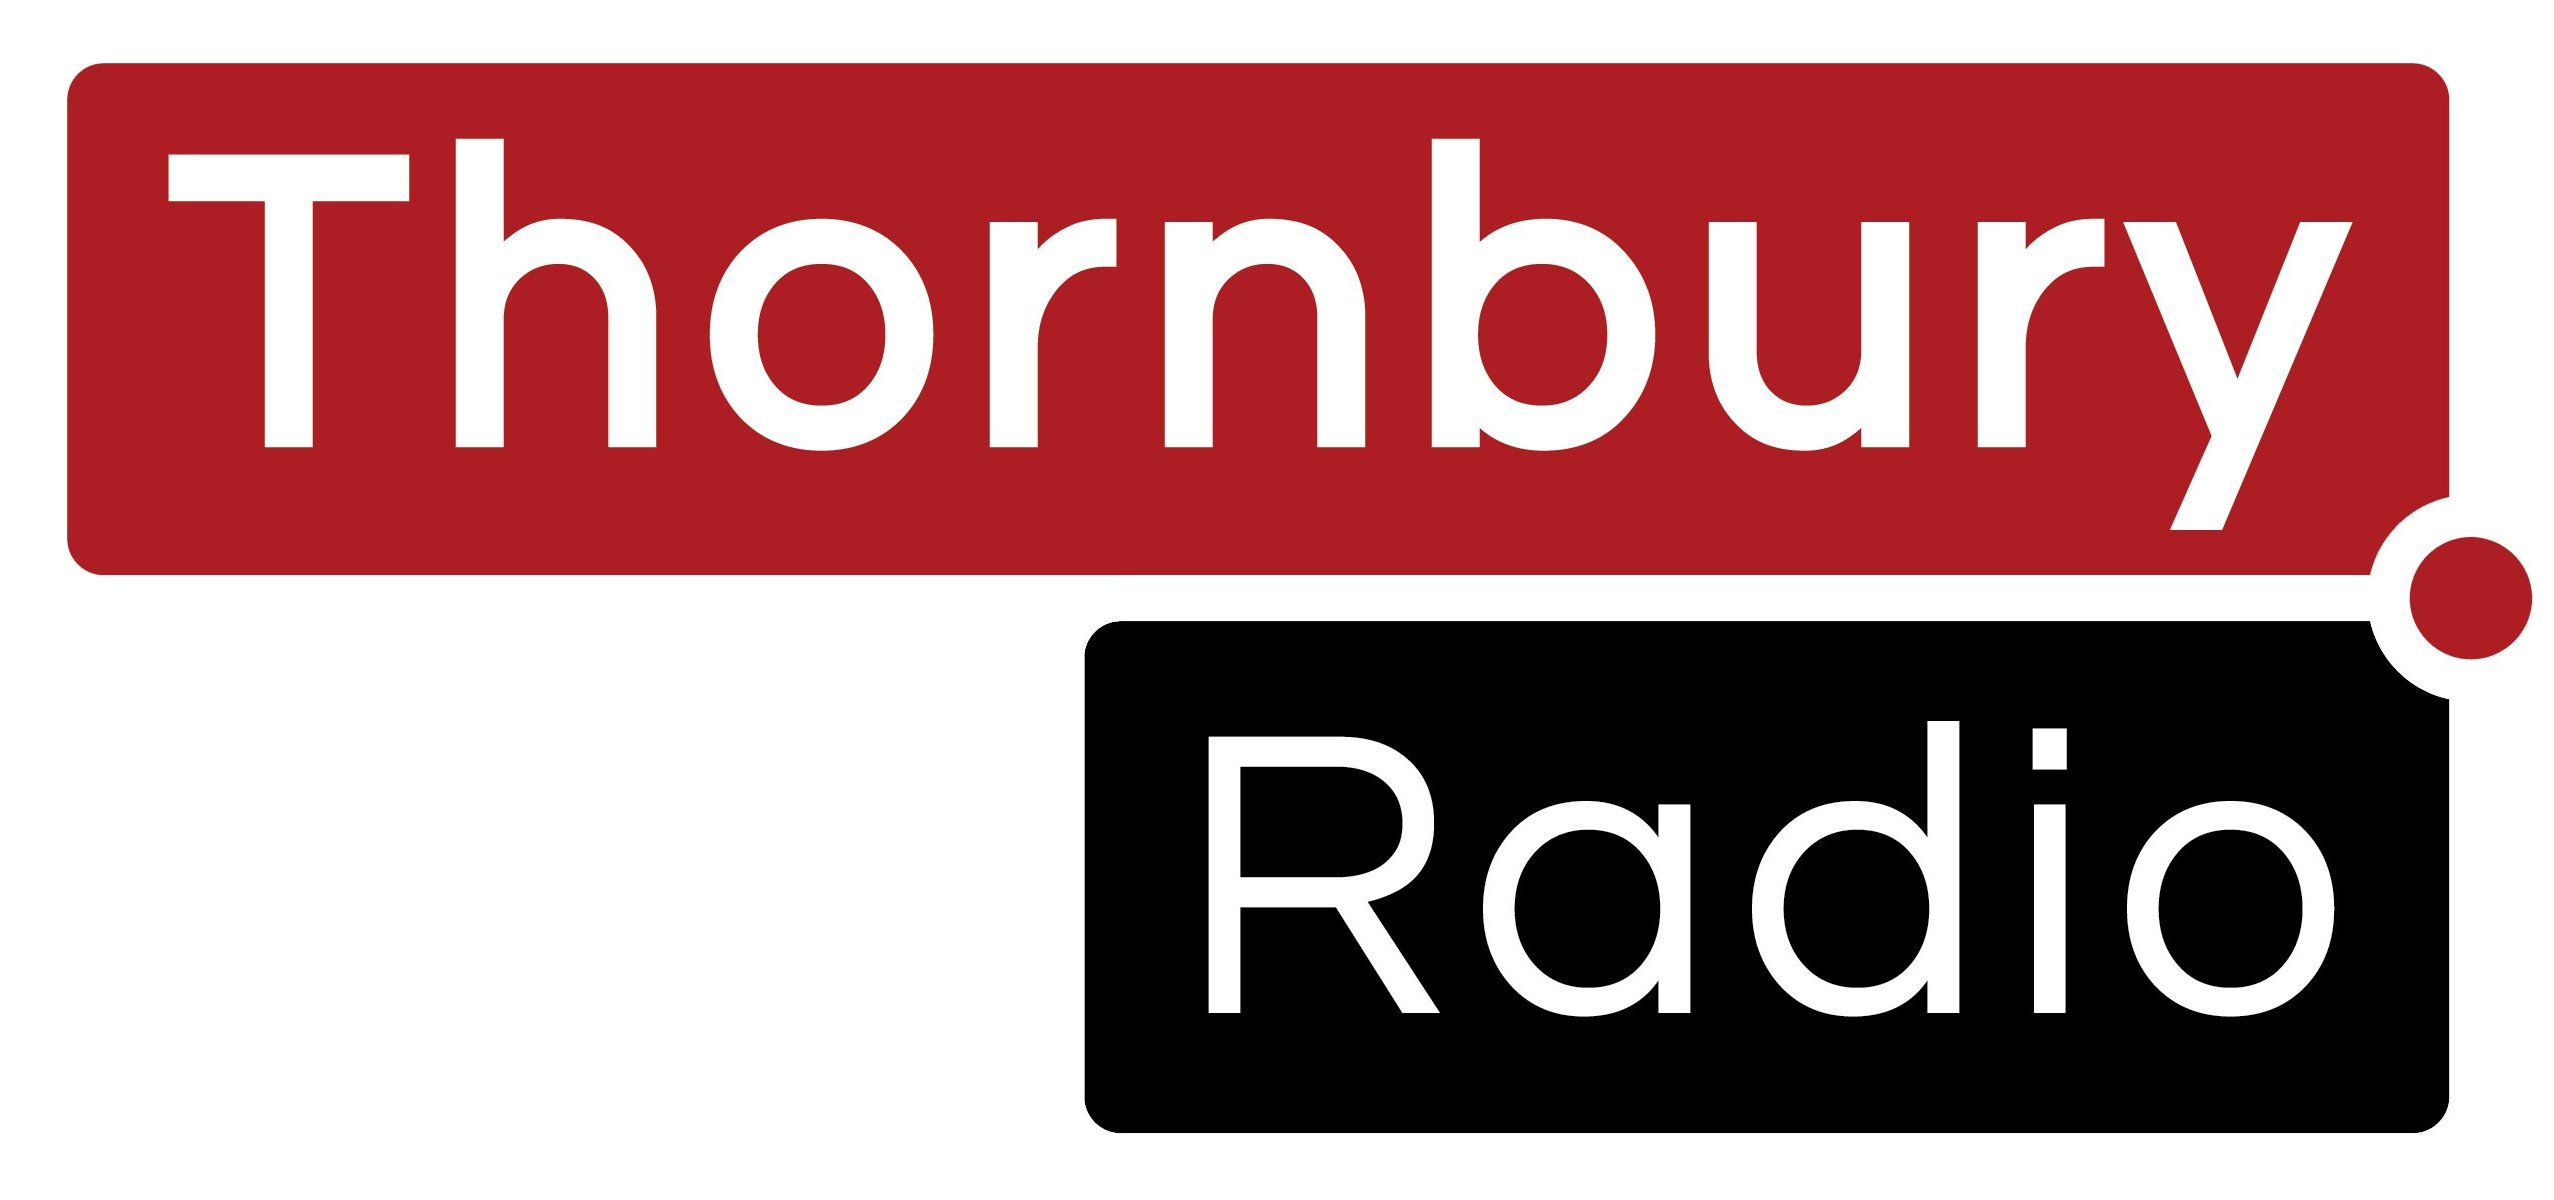 Link to Thornbury Radio